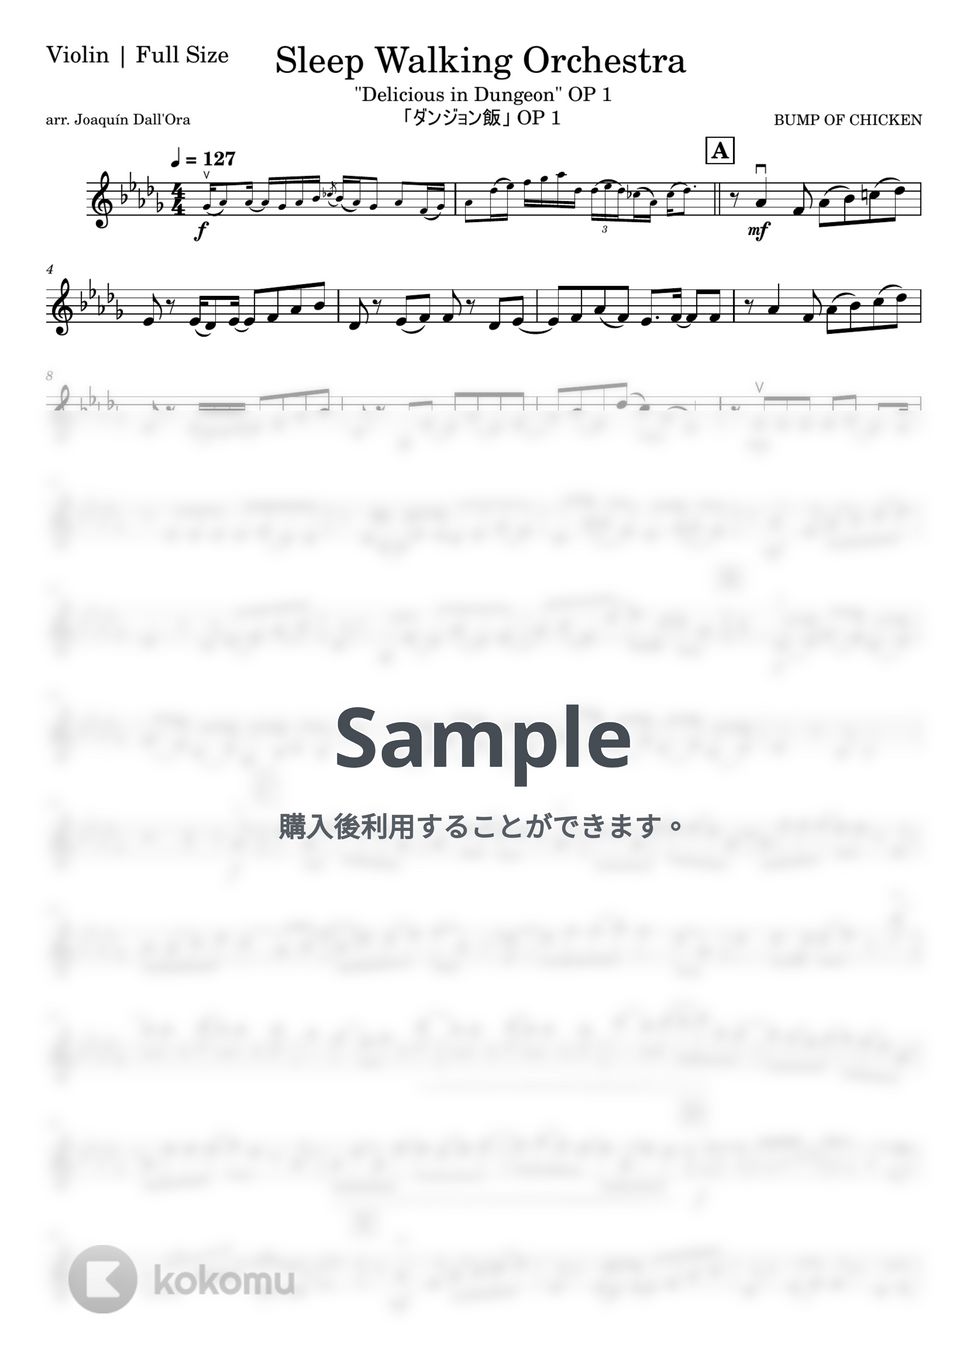 BUMP OF CHICKEN - Sleep Walking Orchestra [フルサイズ] | 「ダンジョン飯」 OP 1 by co-neko